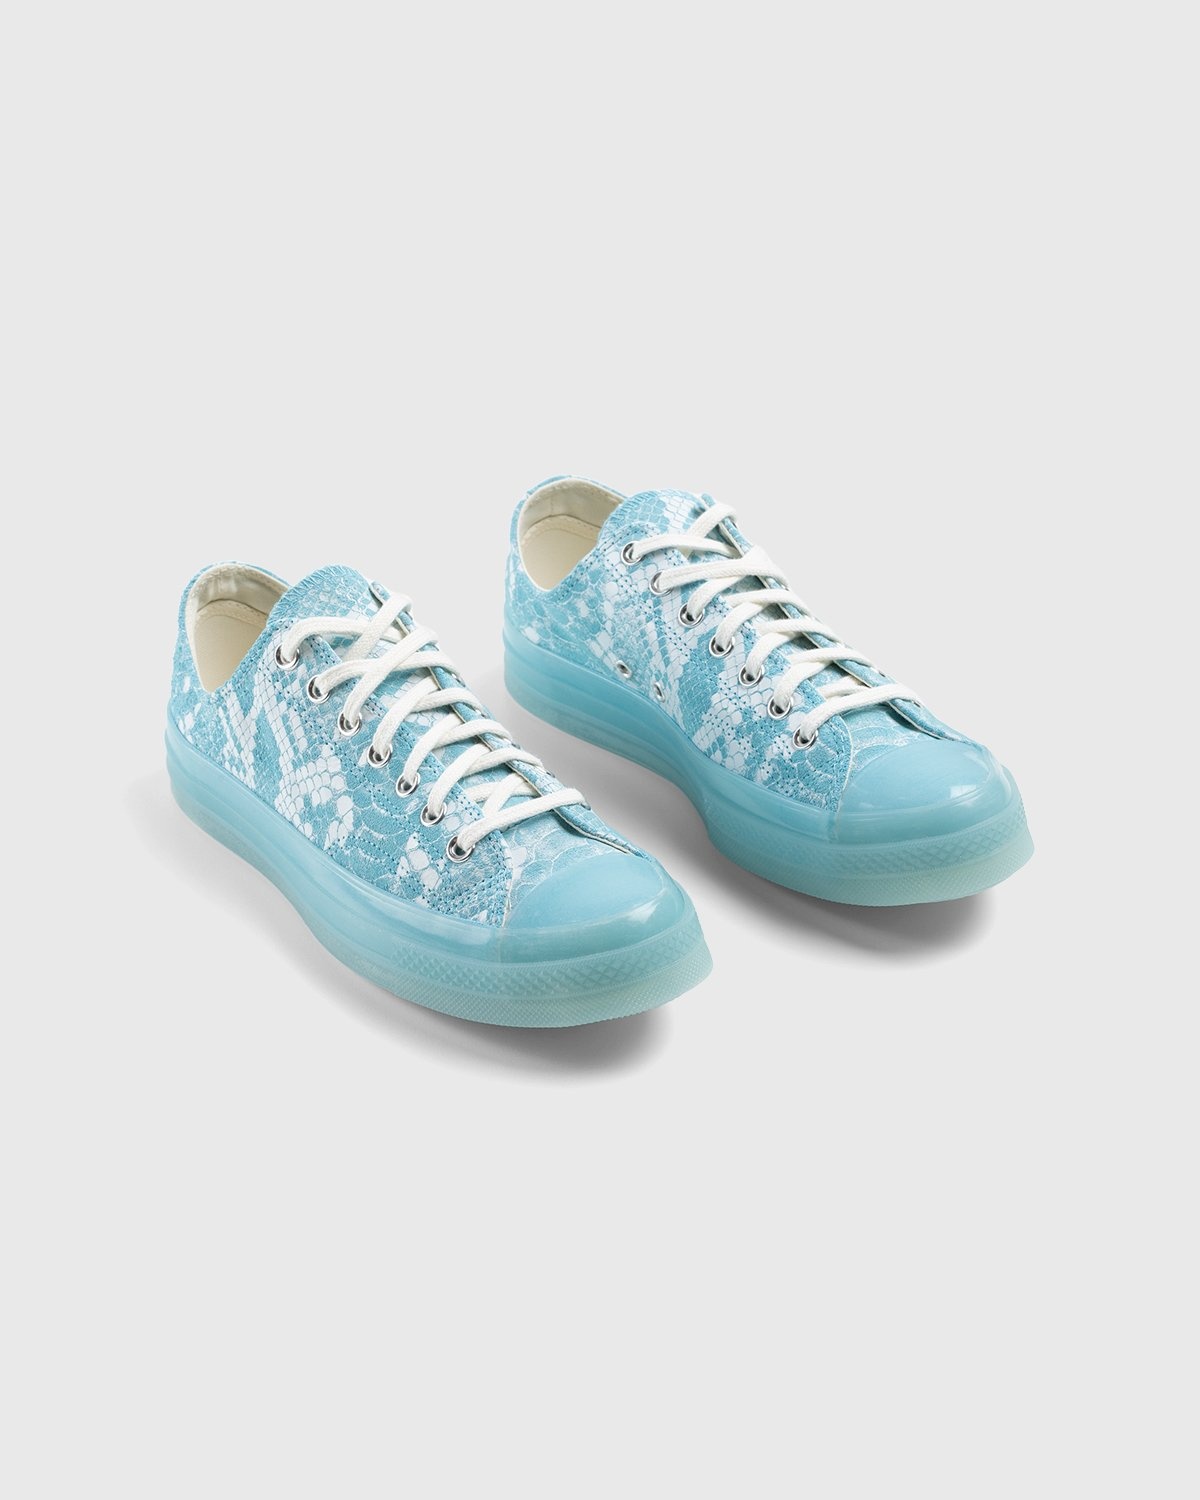 Converse x GOLF WANG – Chuck 70 Ox Python Vintage White Blue Topaz - Low Top Sneakers - Blue - Image 3